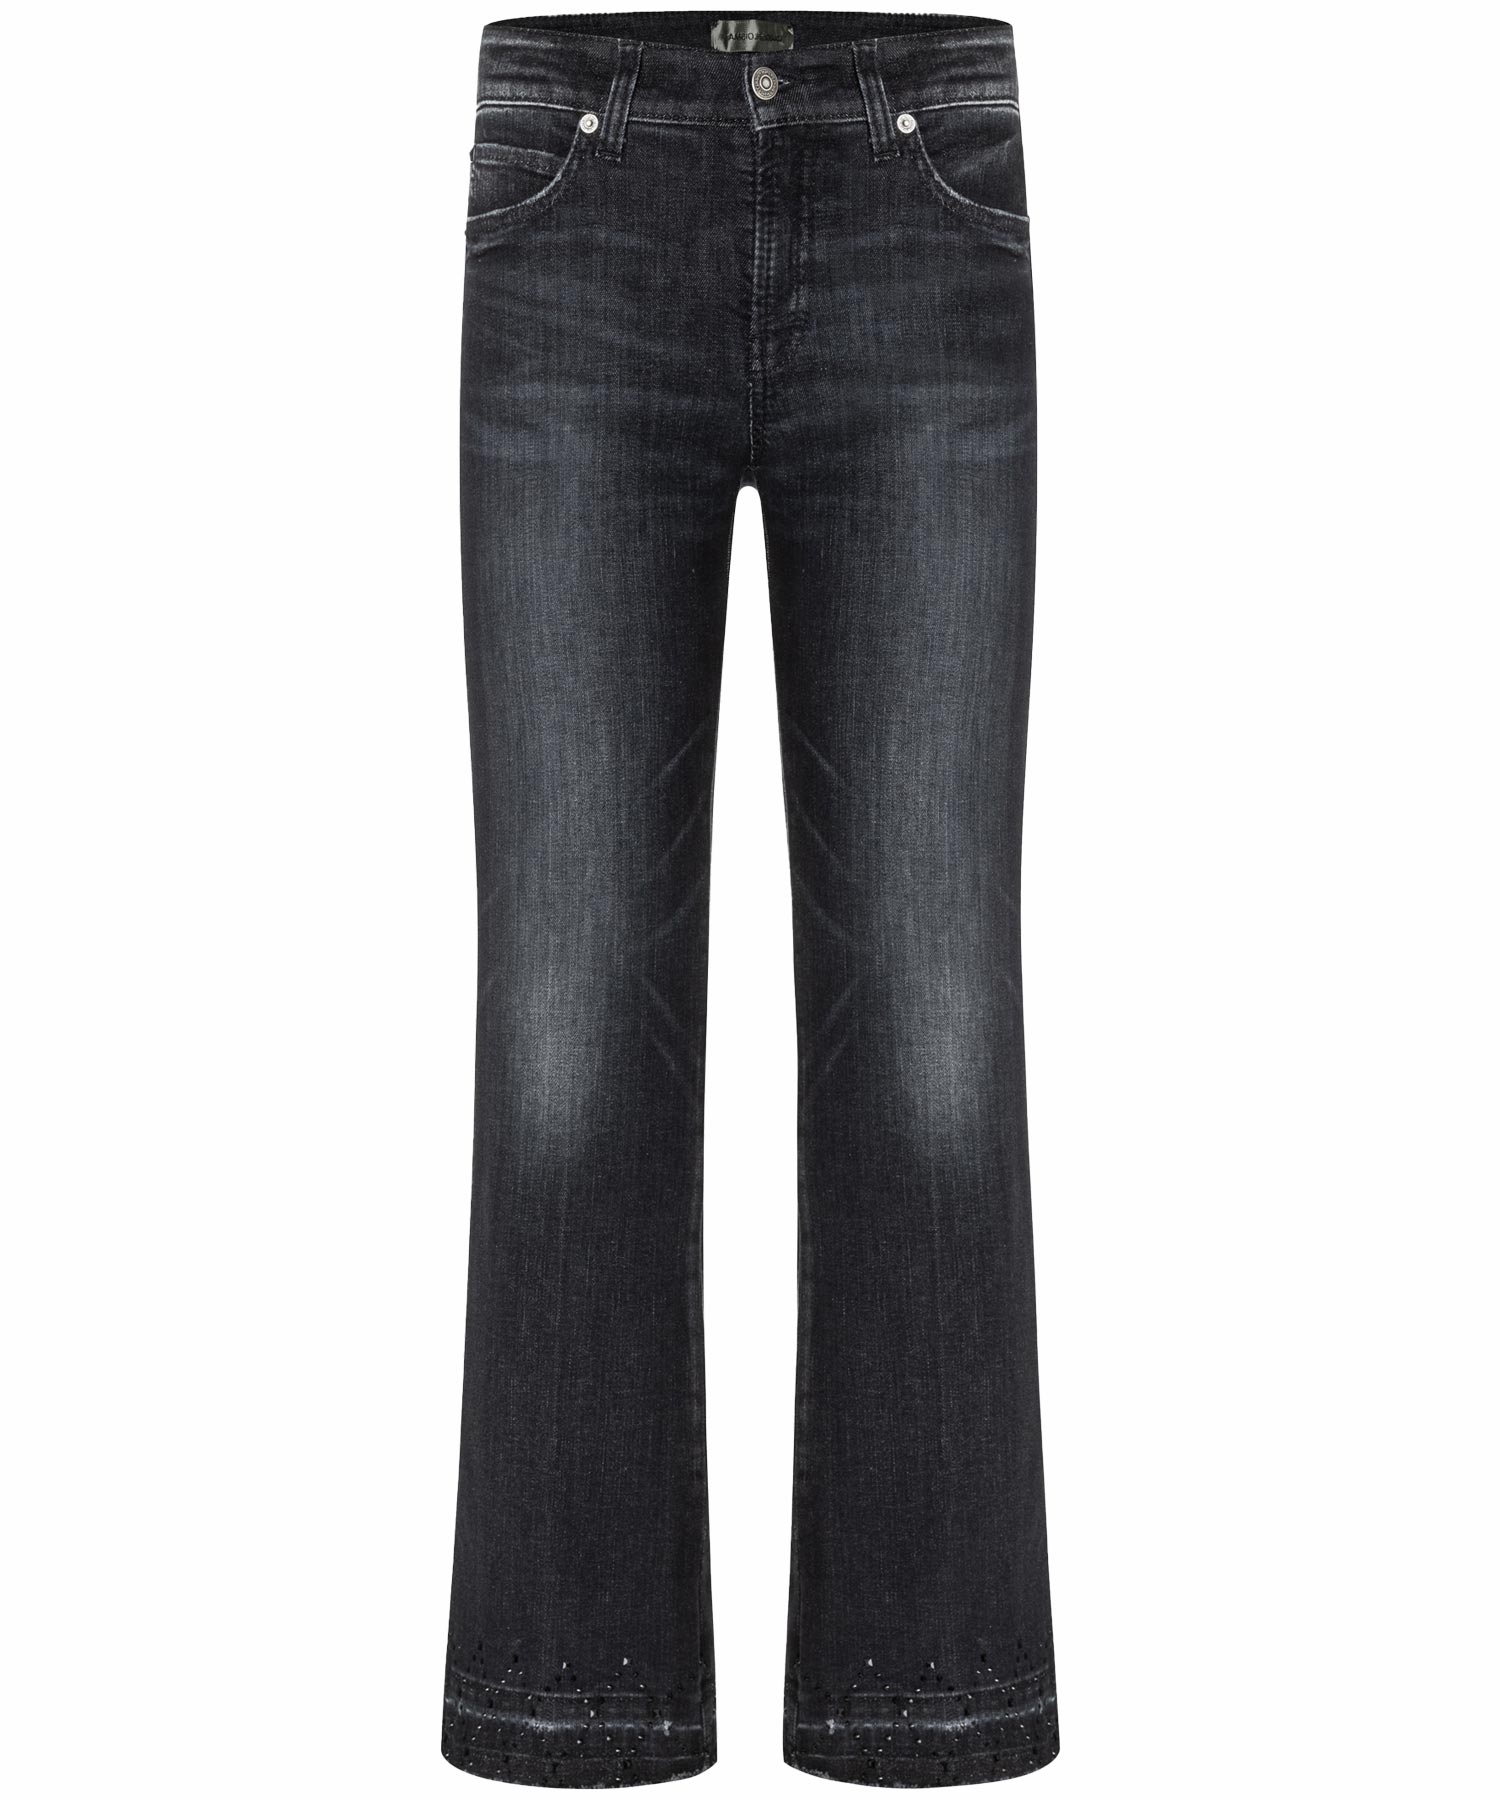 Cambio Jeans Francesca in black